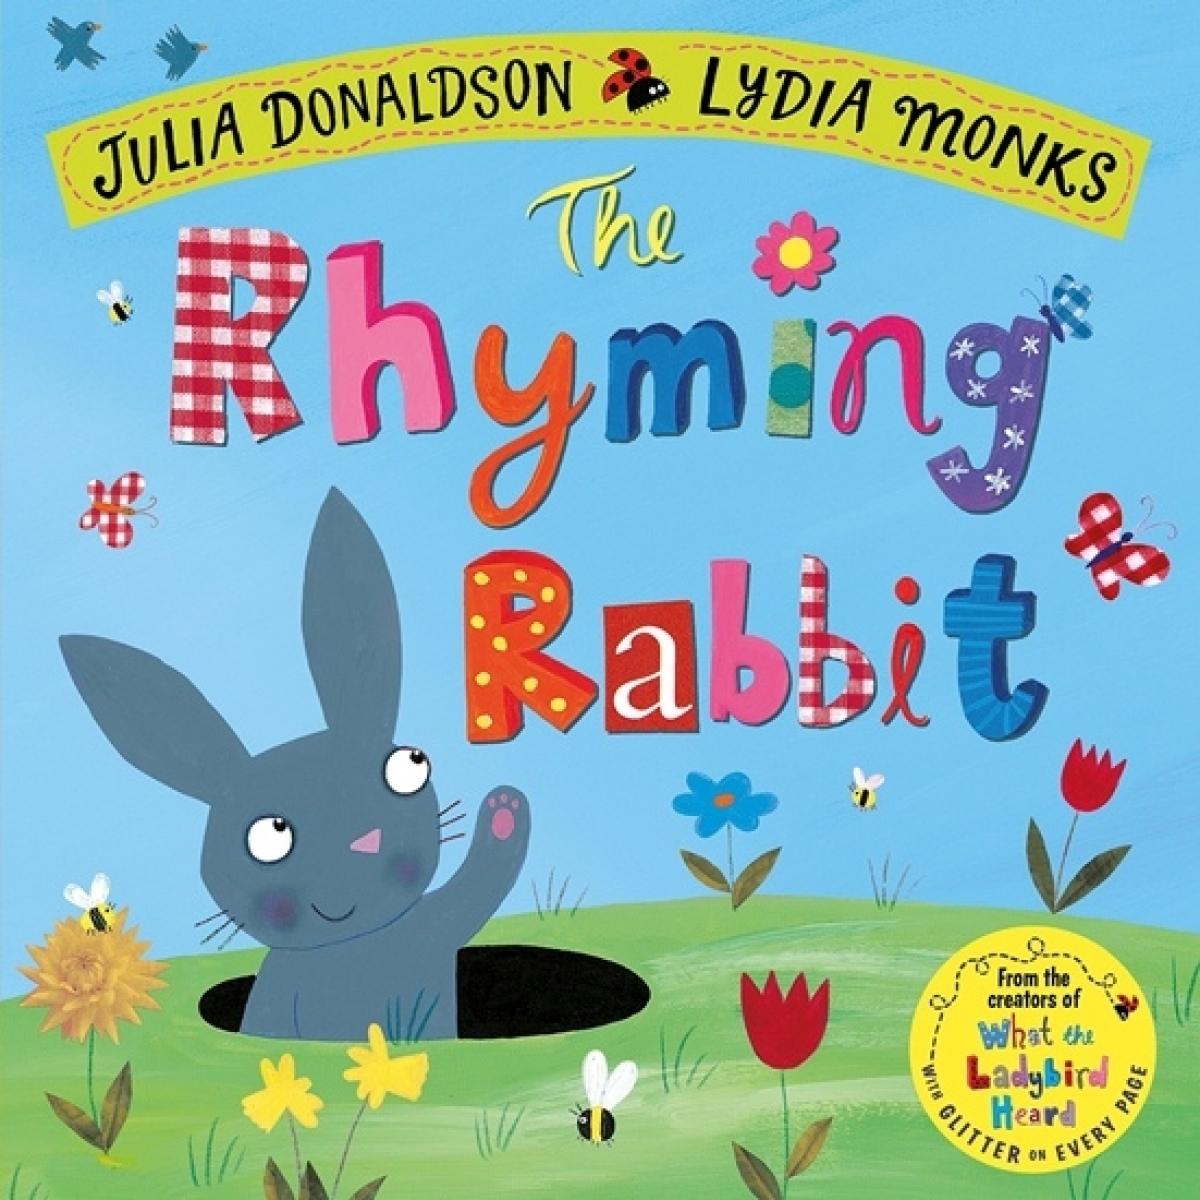 Donaldson Julia Rhyming Rabbit 